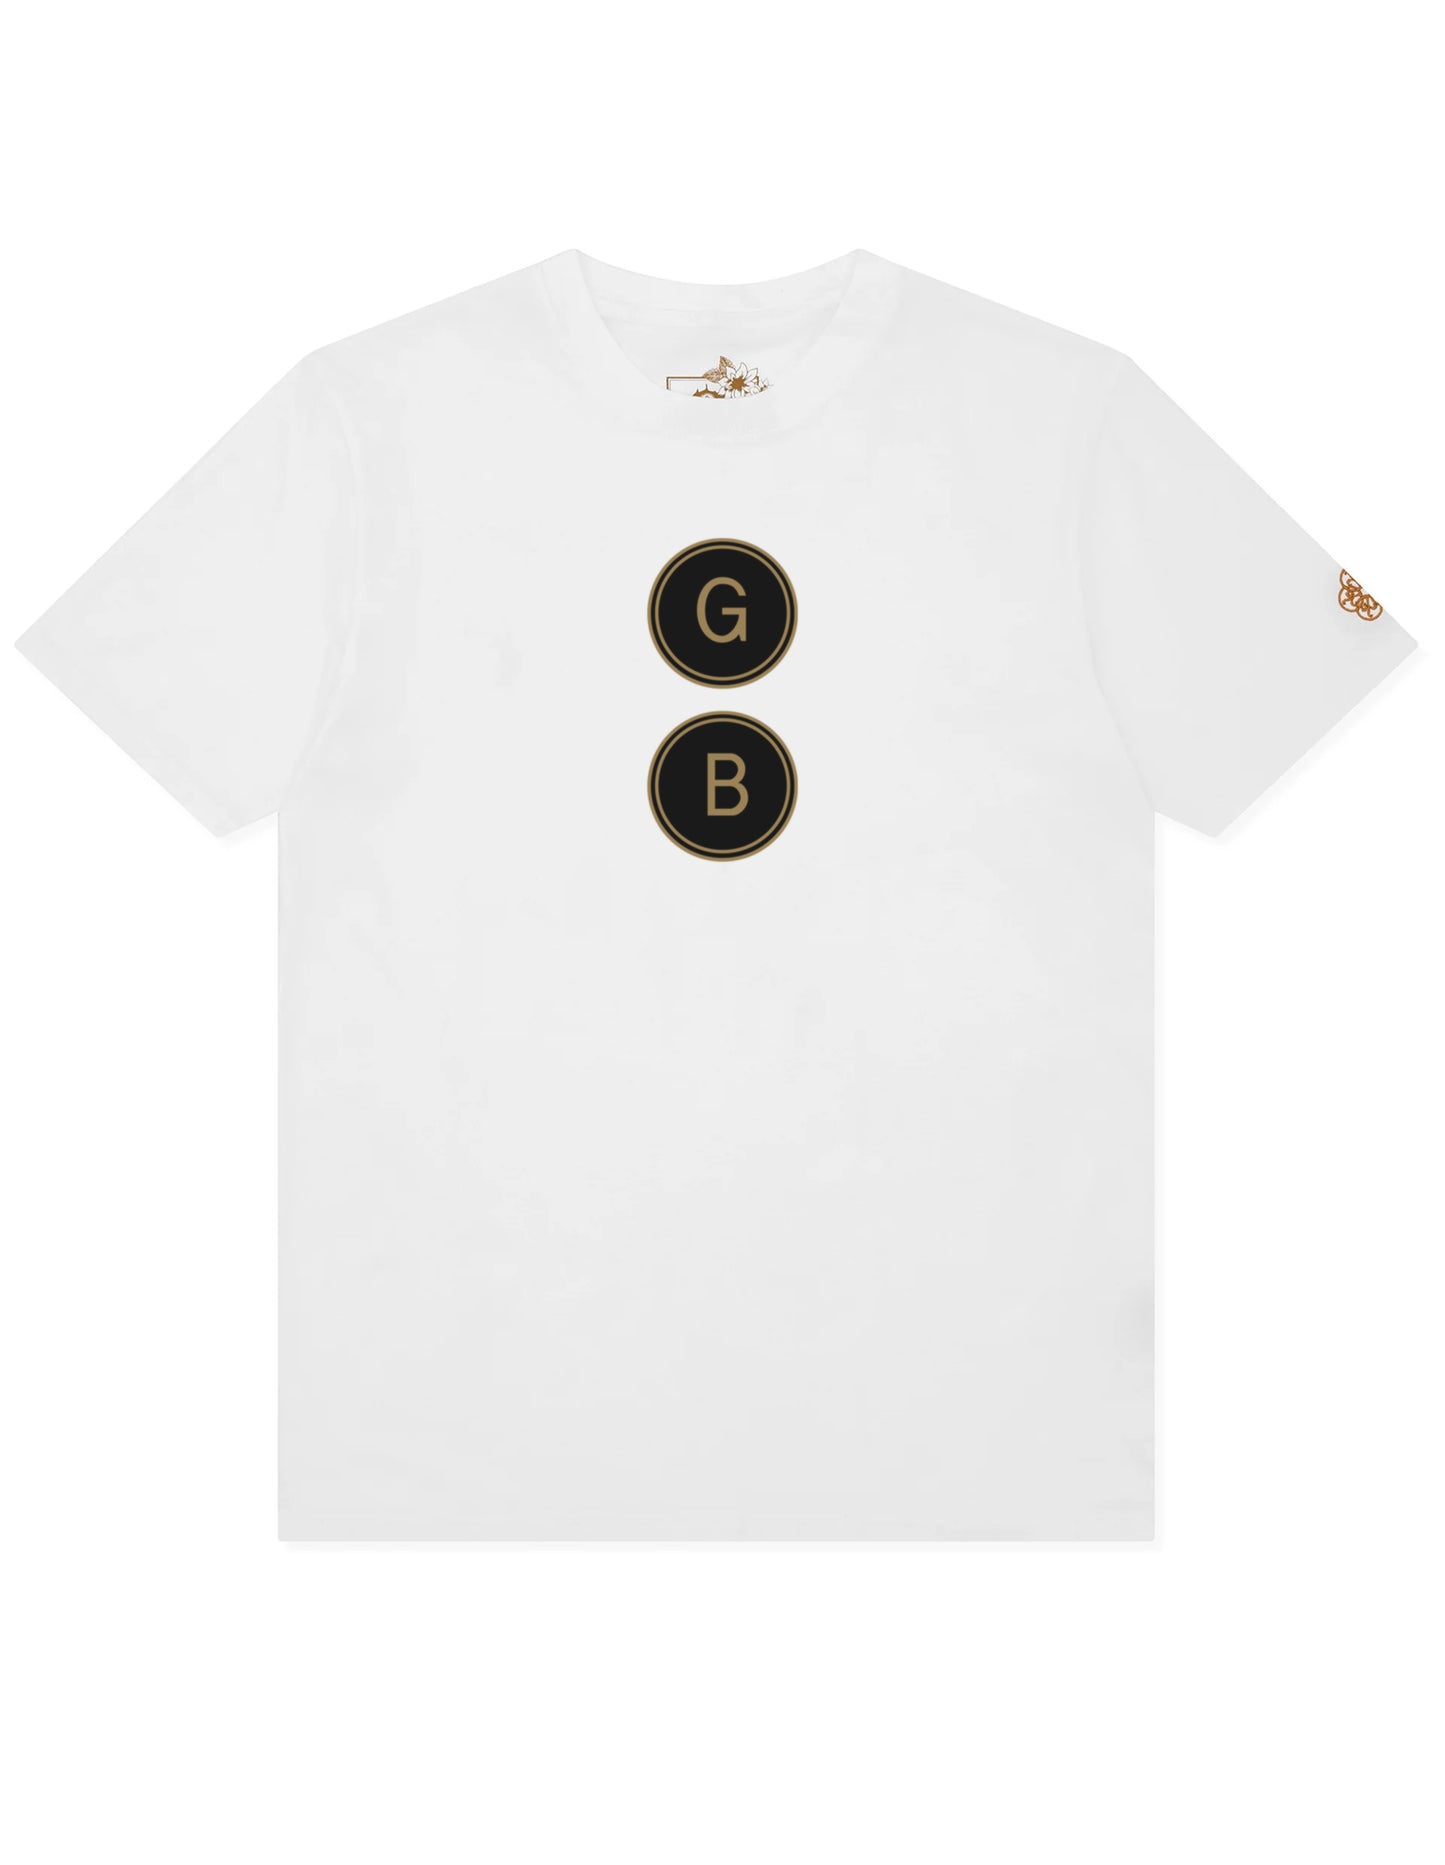 GB Elevator T-Shirt